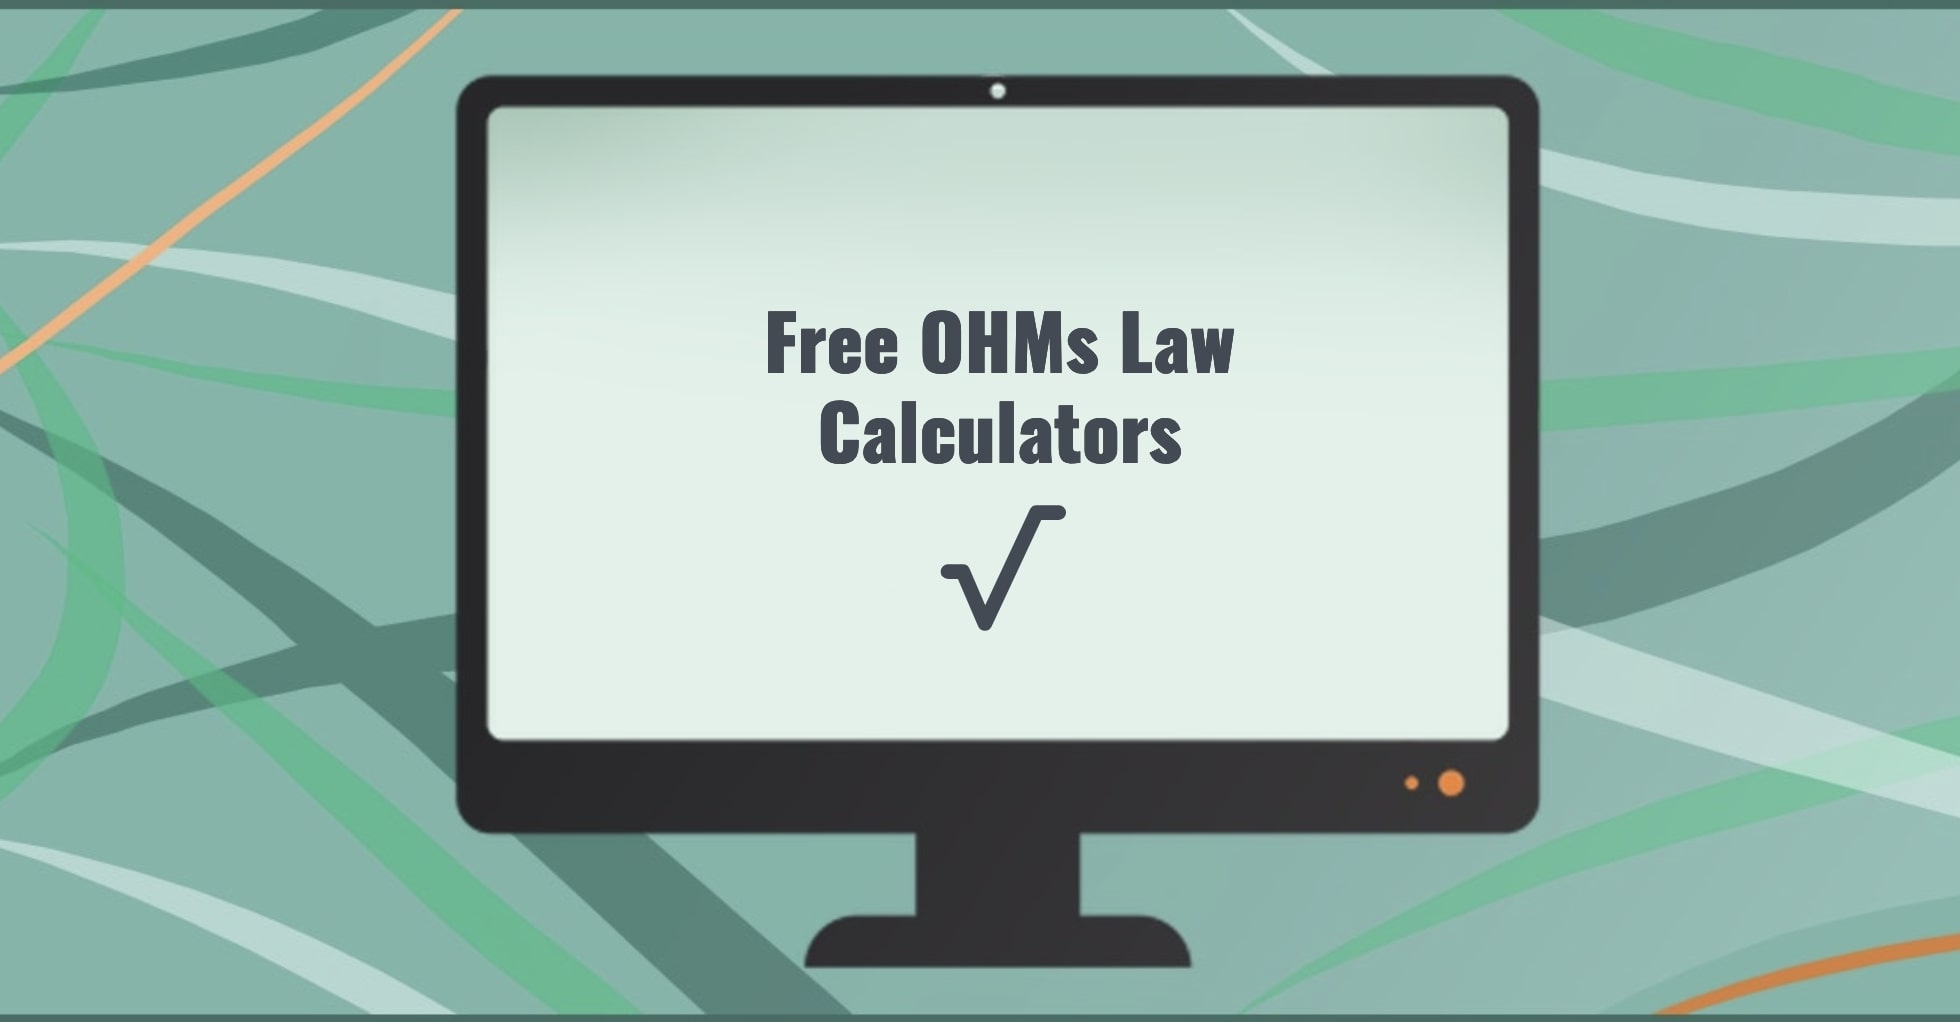 Free OHMs Law Calculators